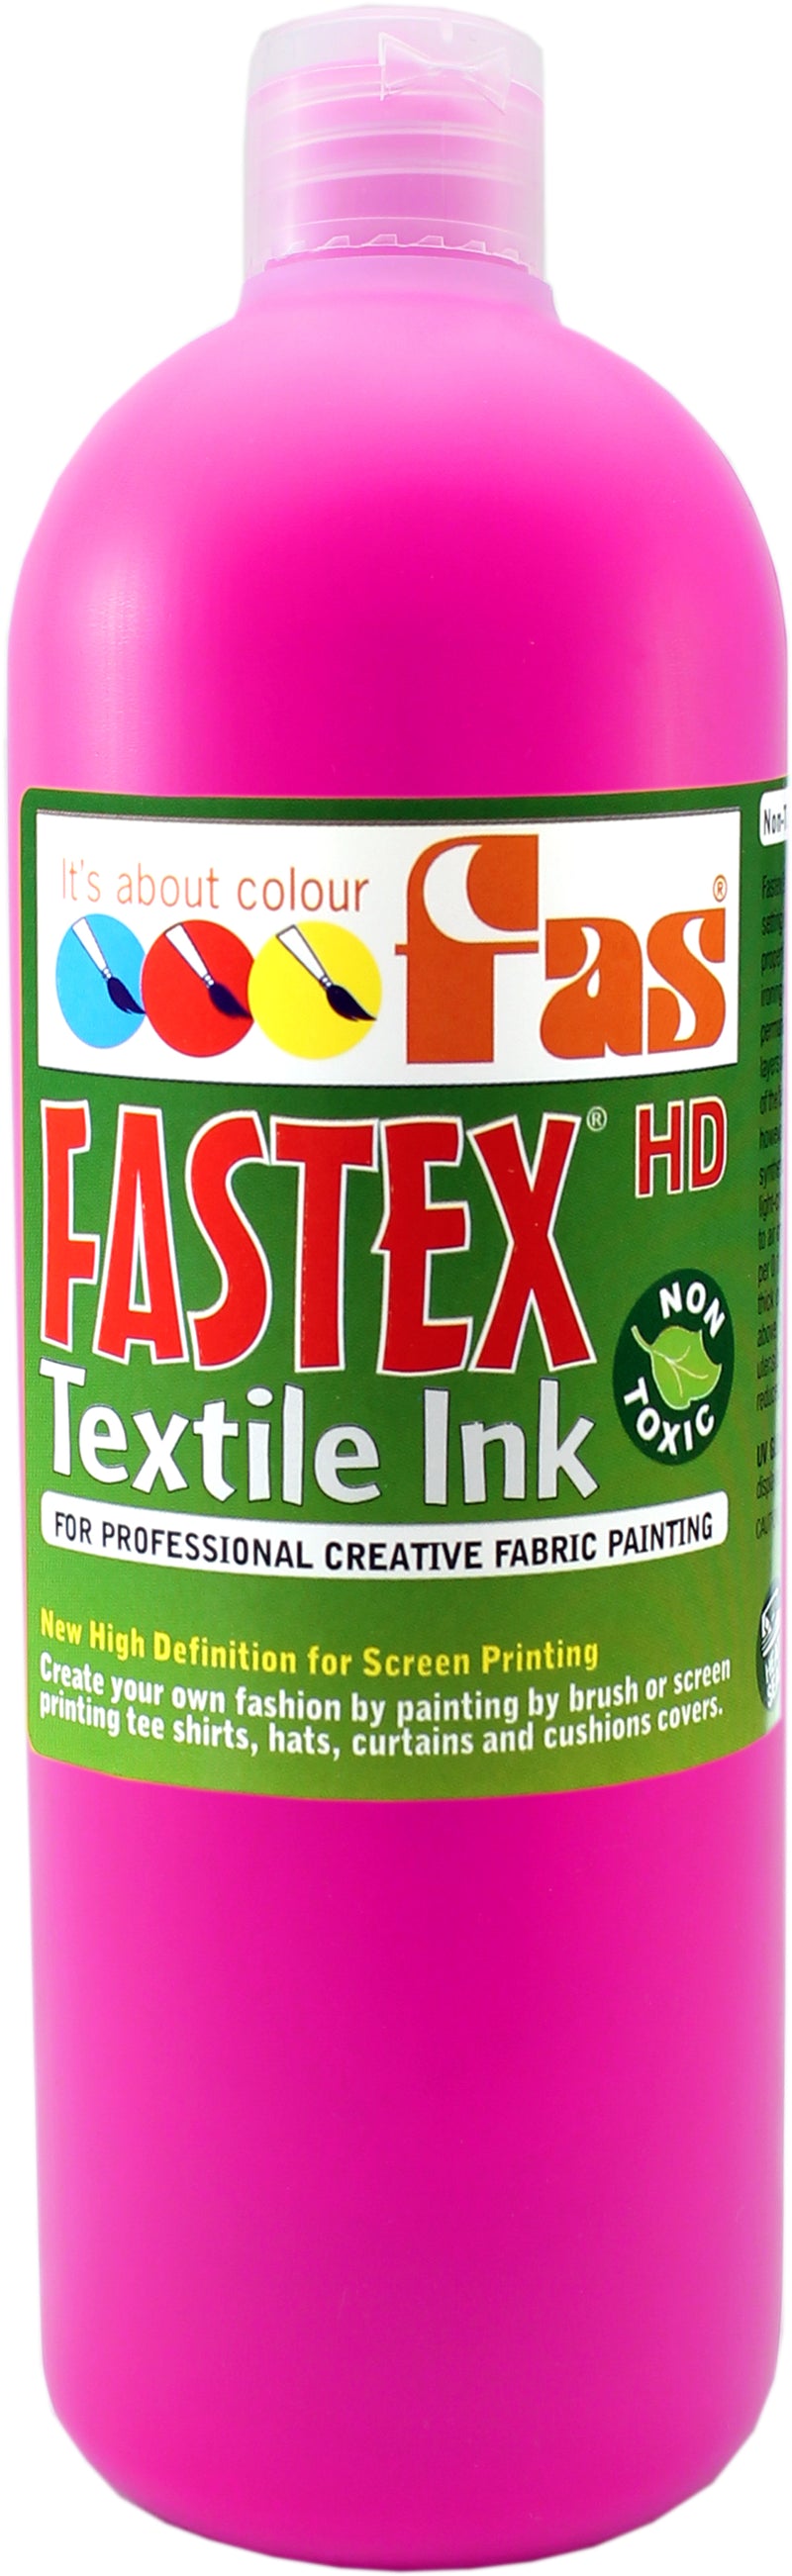 Fas Textile Fabric Ink 1 Litre